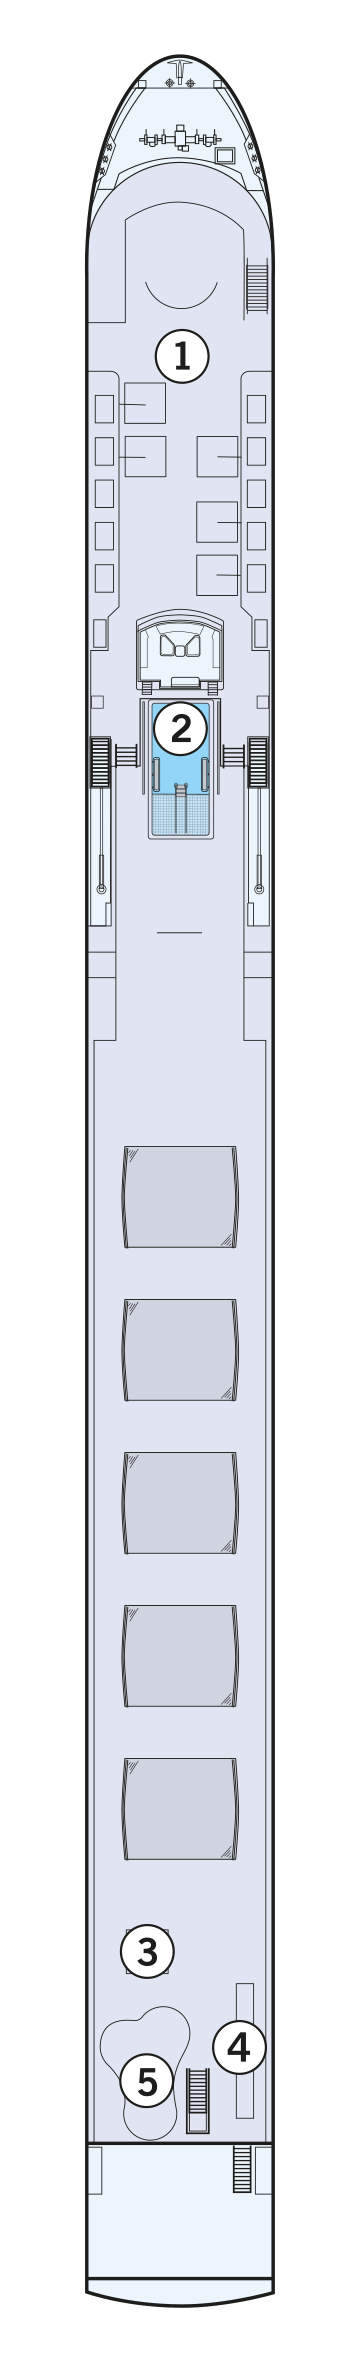 MS Amadeus Nova - Amadeus Flusskreuzfahrten - Deck 4 (Deck 4)